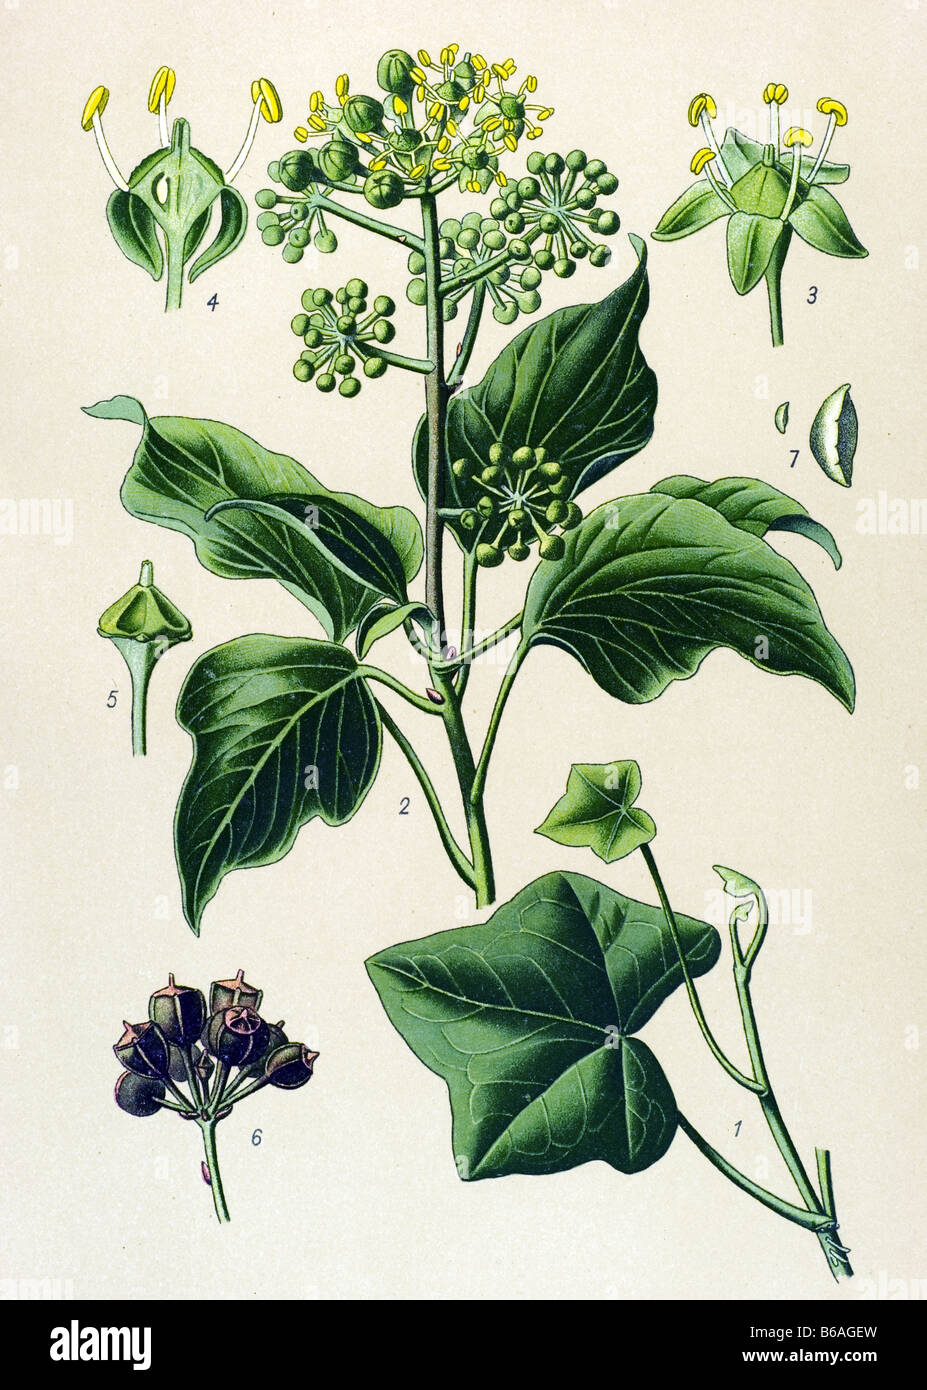 Ivy, Hedera helix poisonous plants illustrations Stock Photo